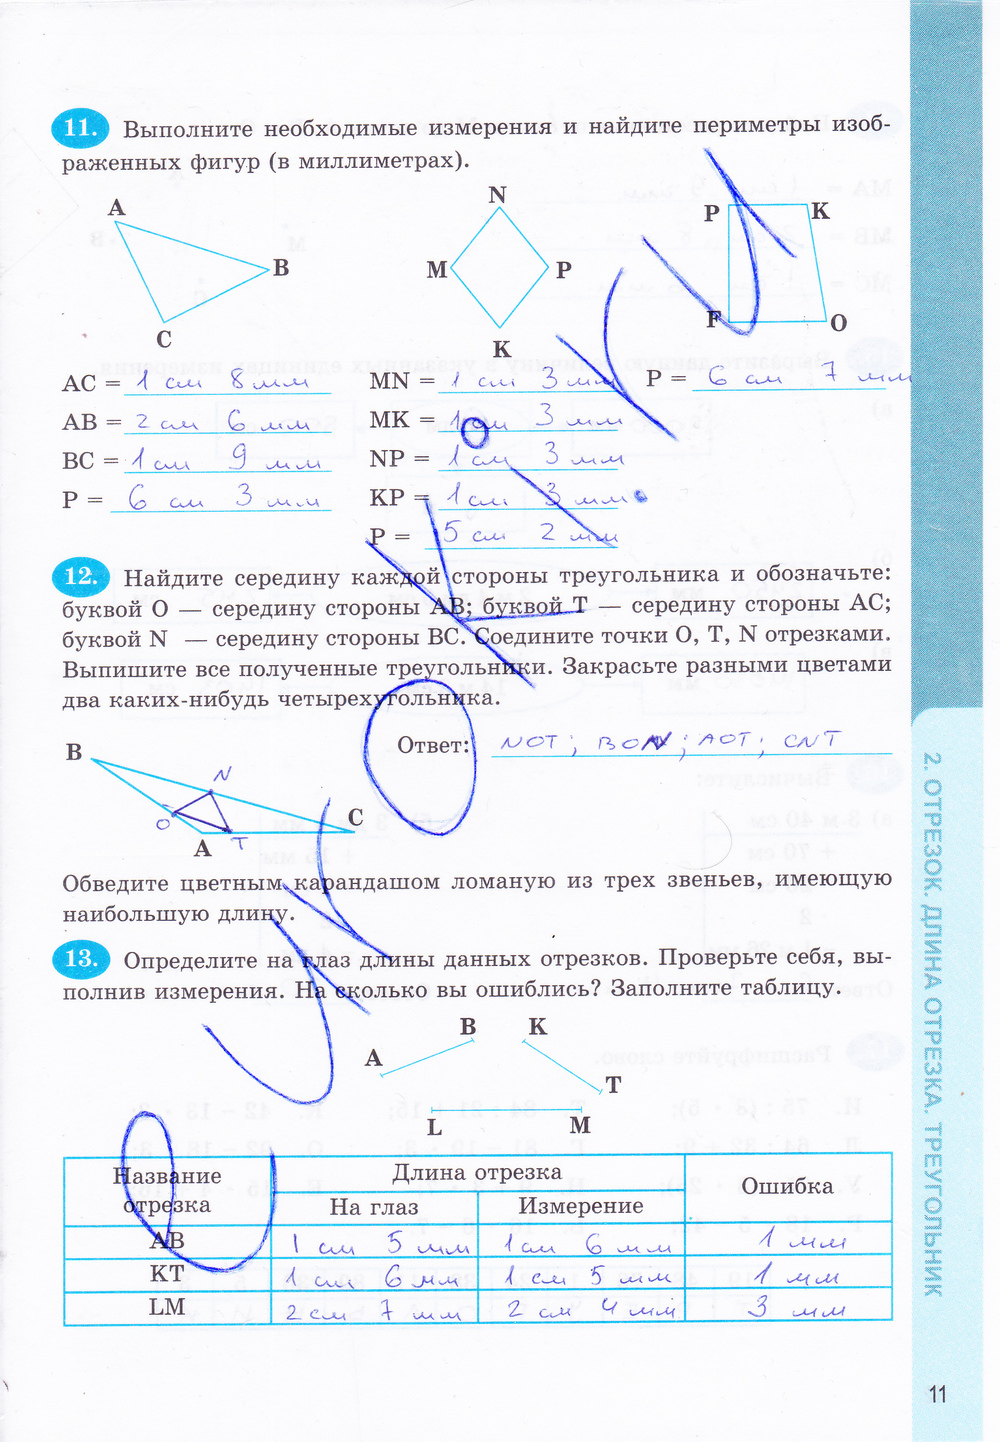 Ответы на решения задач в решебник для тетради по математике т.м.ерина 5 класс на странице